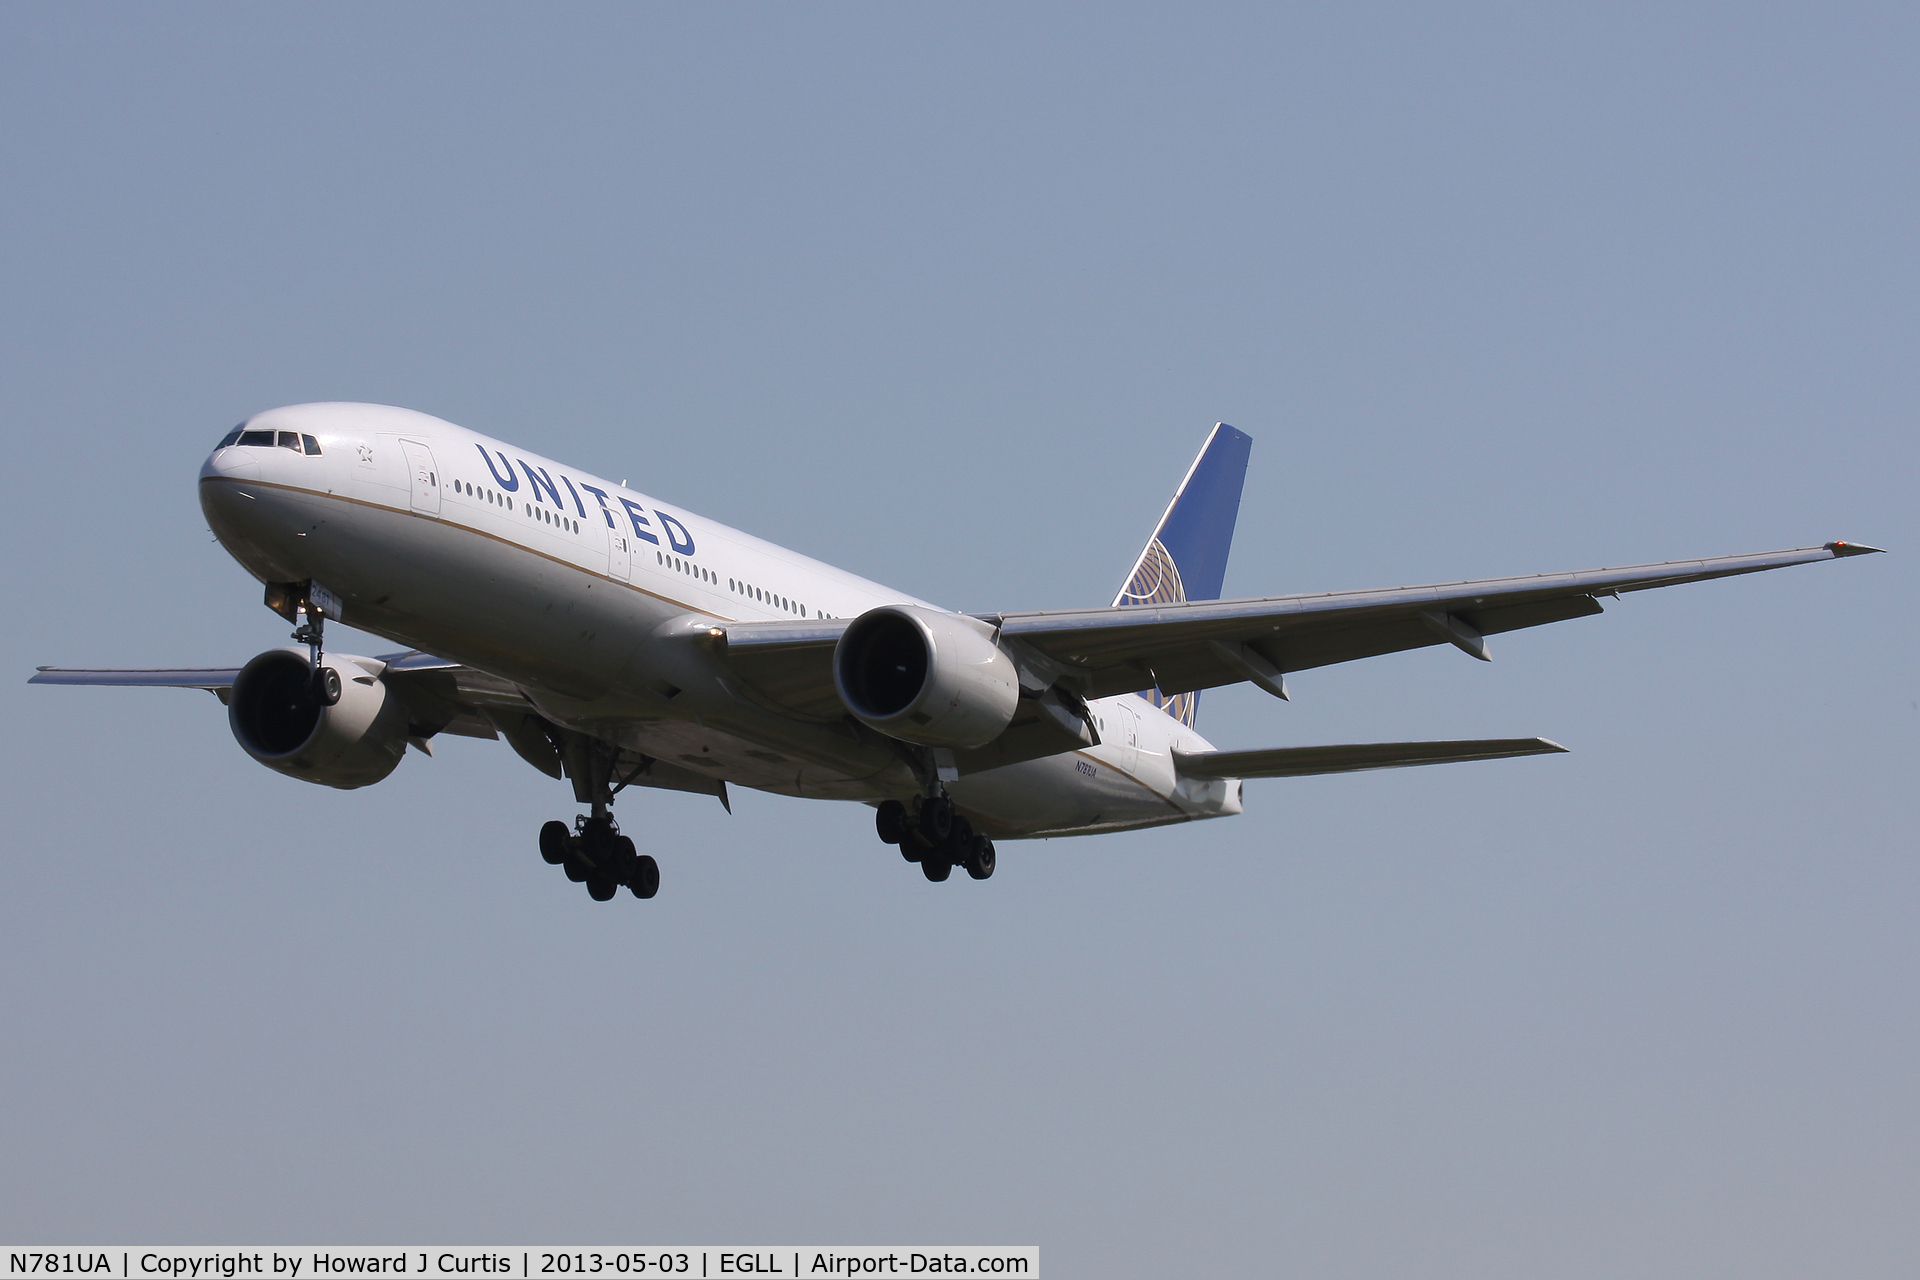 N781UA, 1996 Boeing 777-222 C/N 26945, United Airlines, on approach to runway 27L.